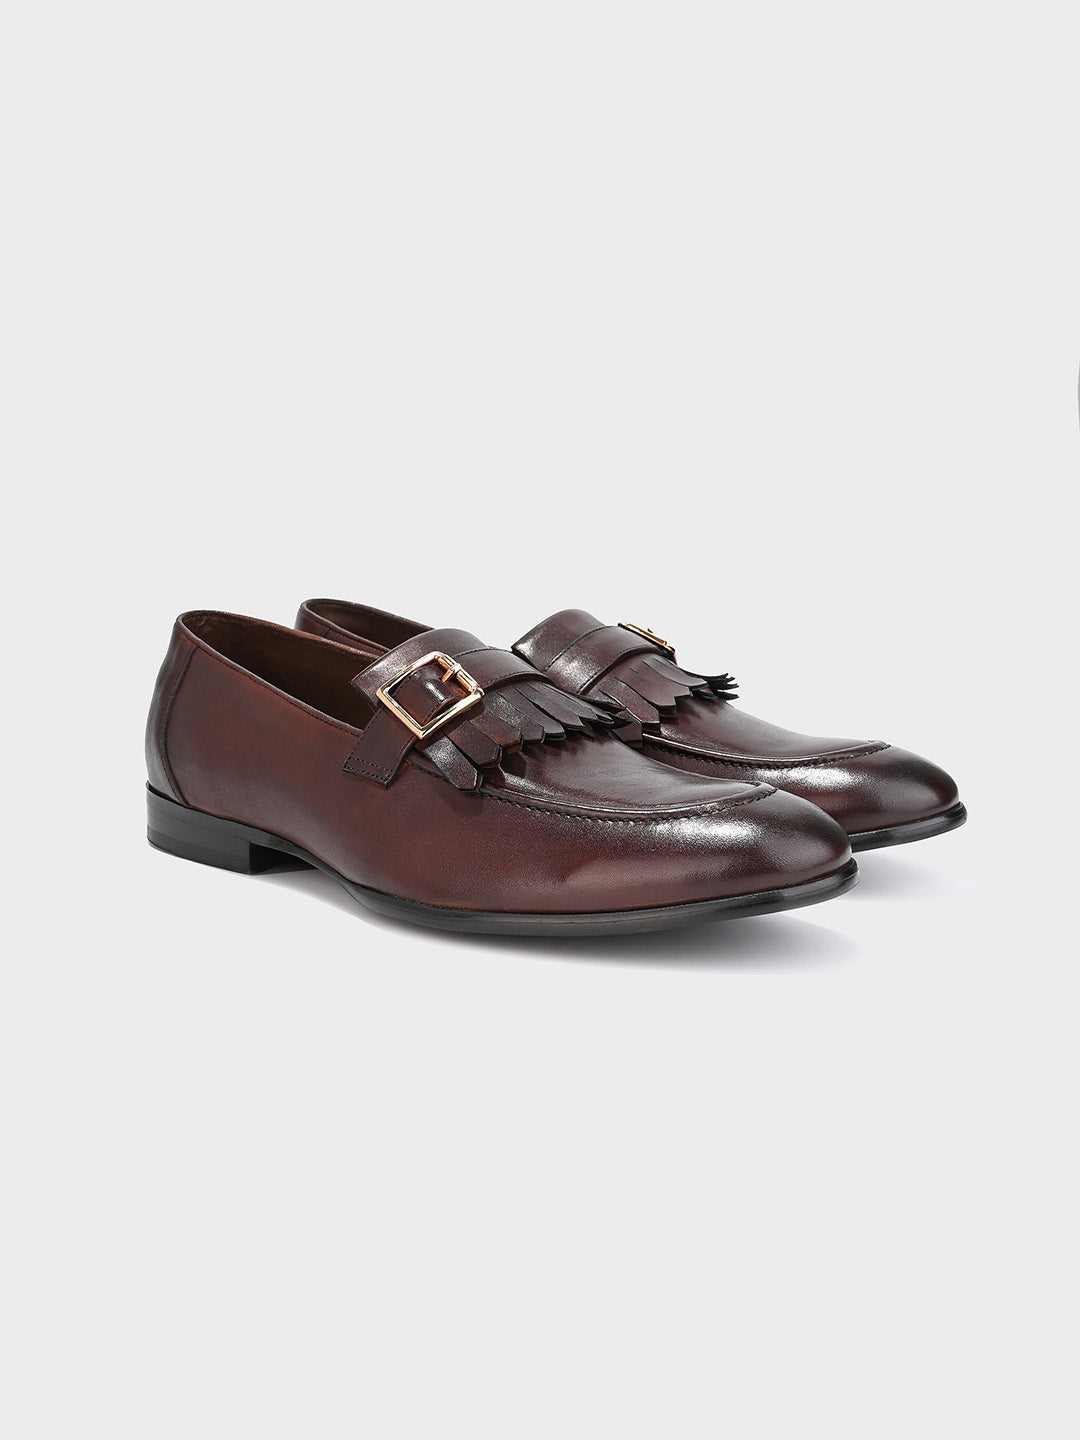 Men's Brown Leather Slip-On Loafer Shoes